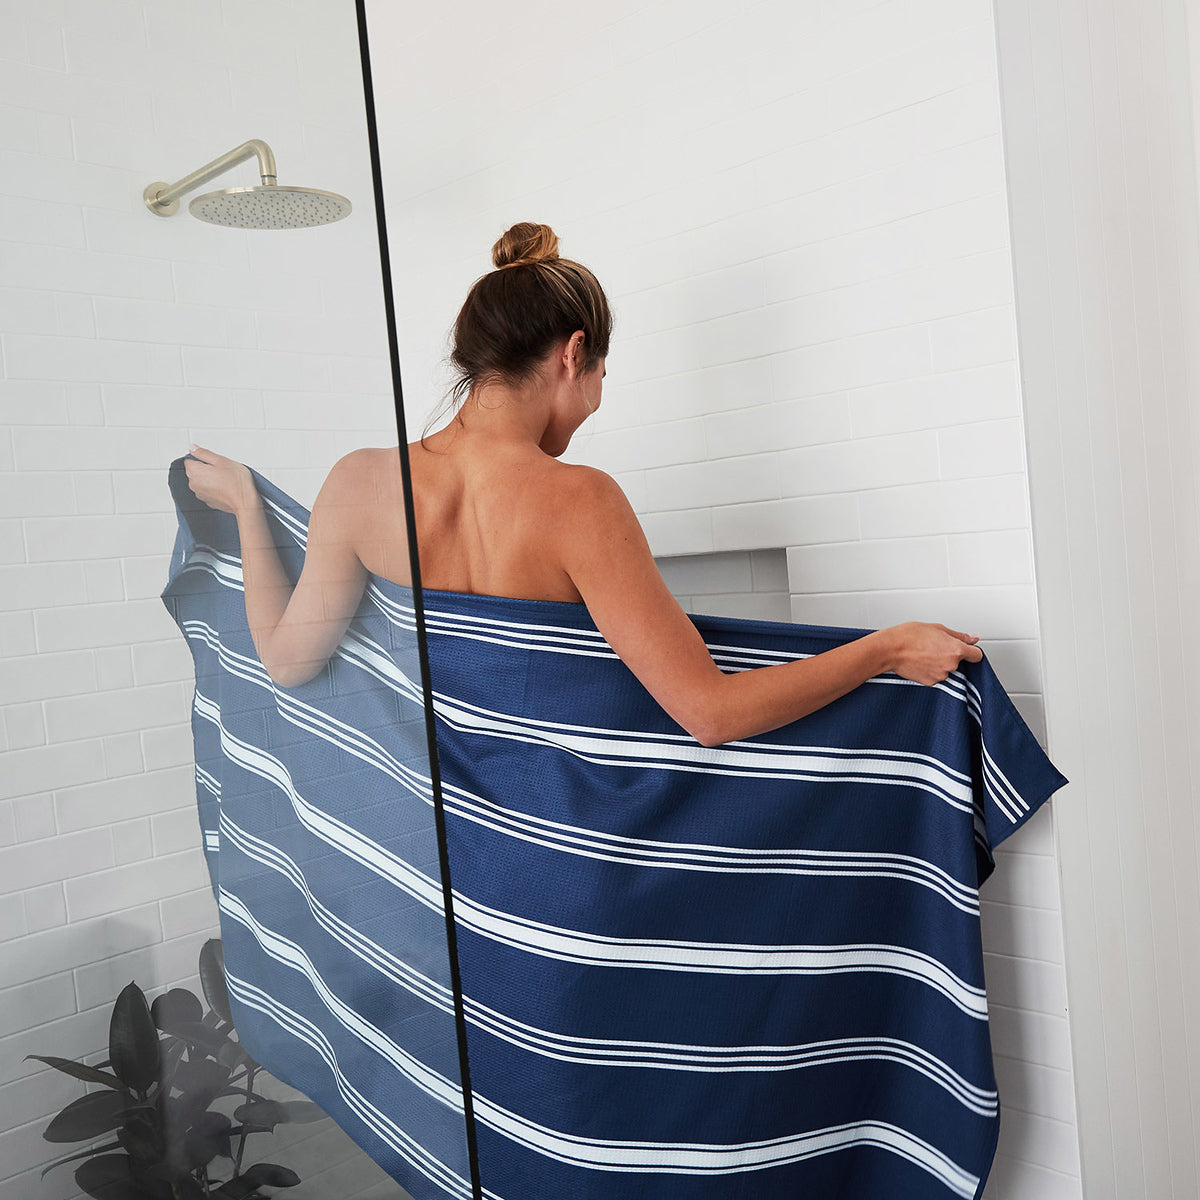 Dock & Bay Bath Towels - Home - Patchouli Navy